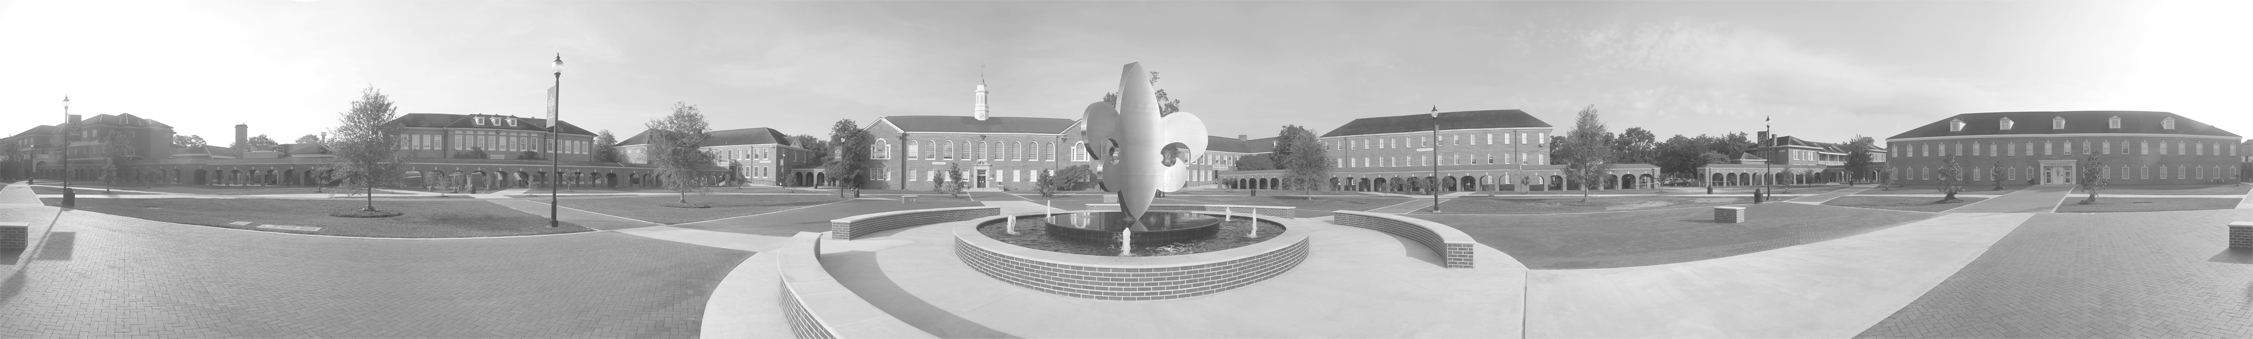 campus panoramic image